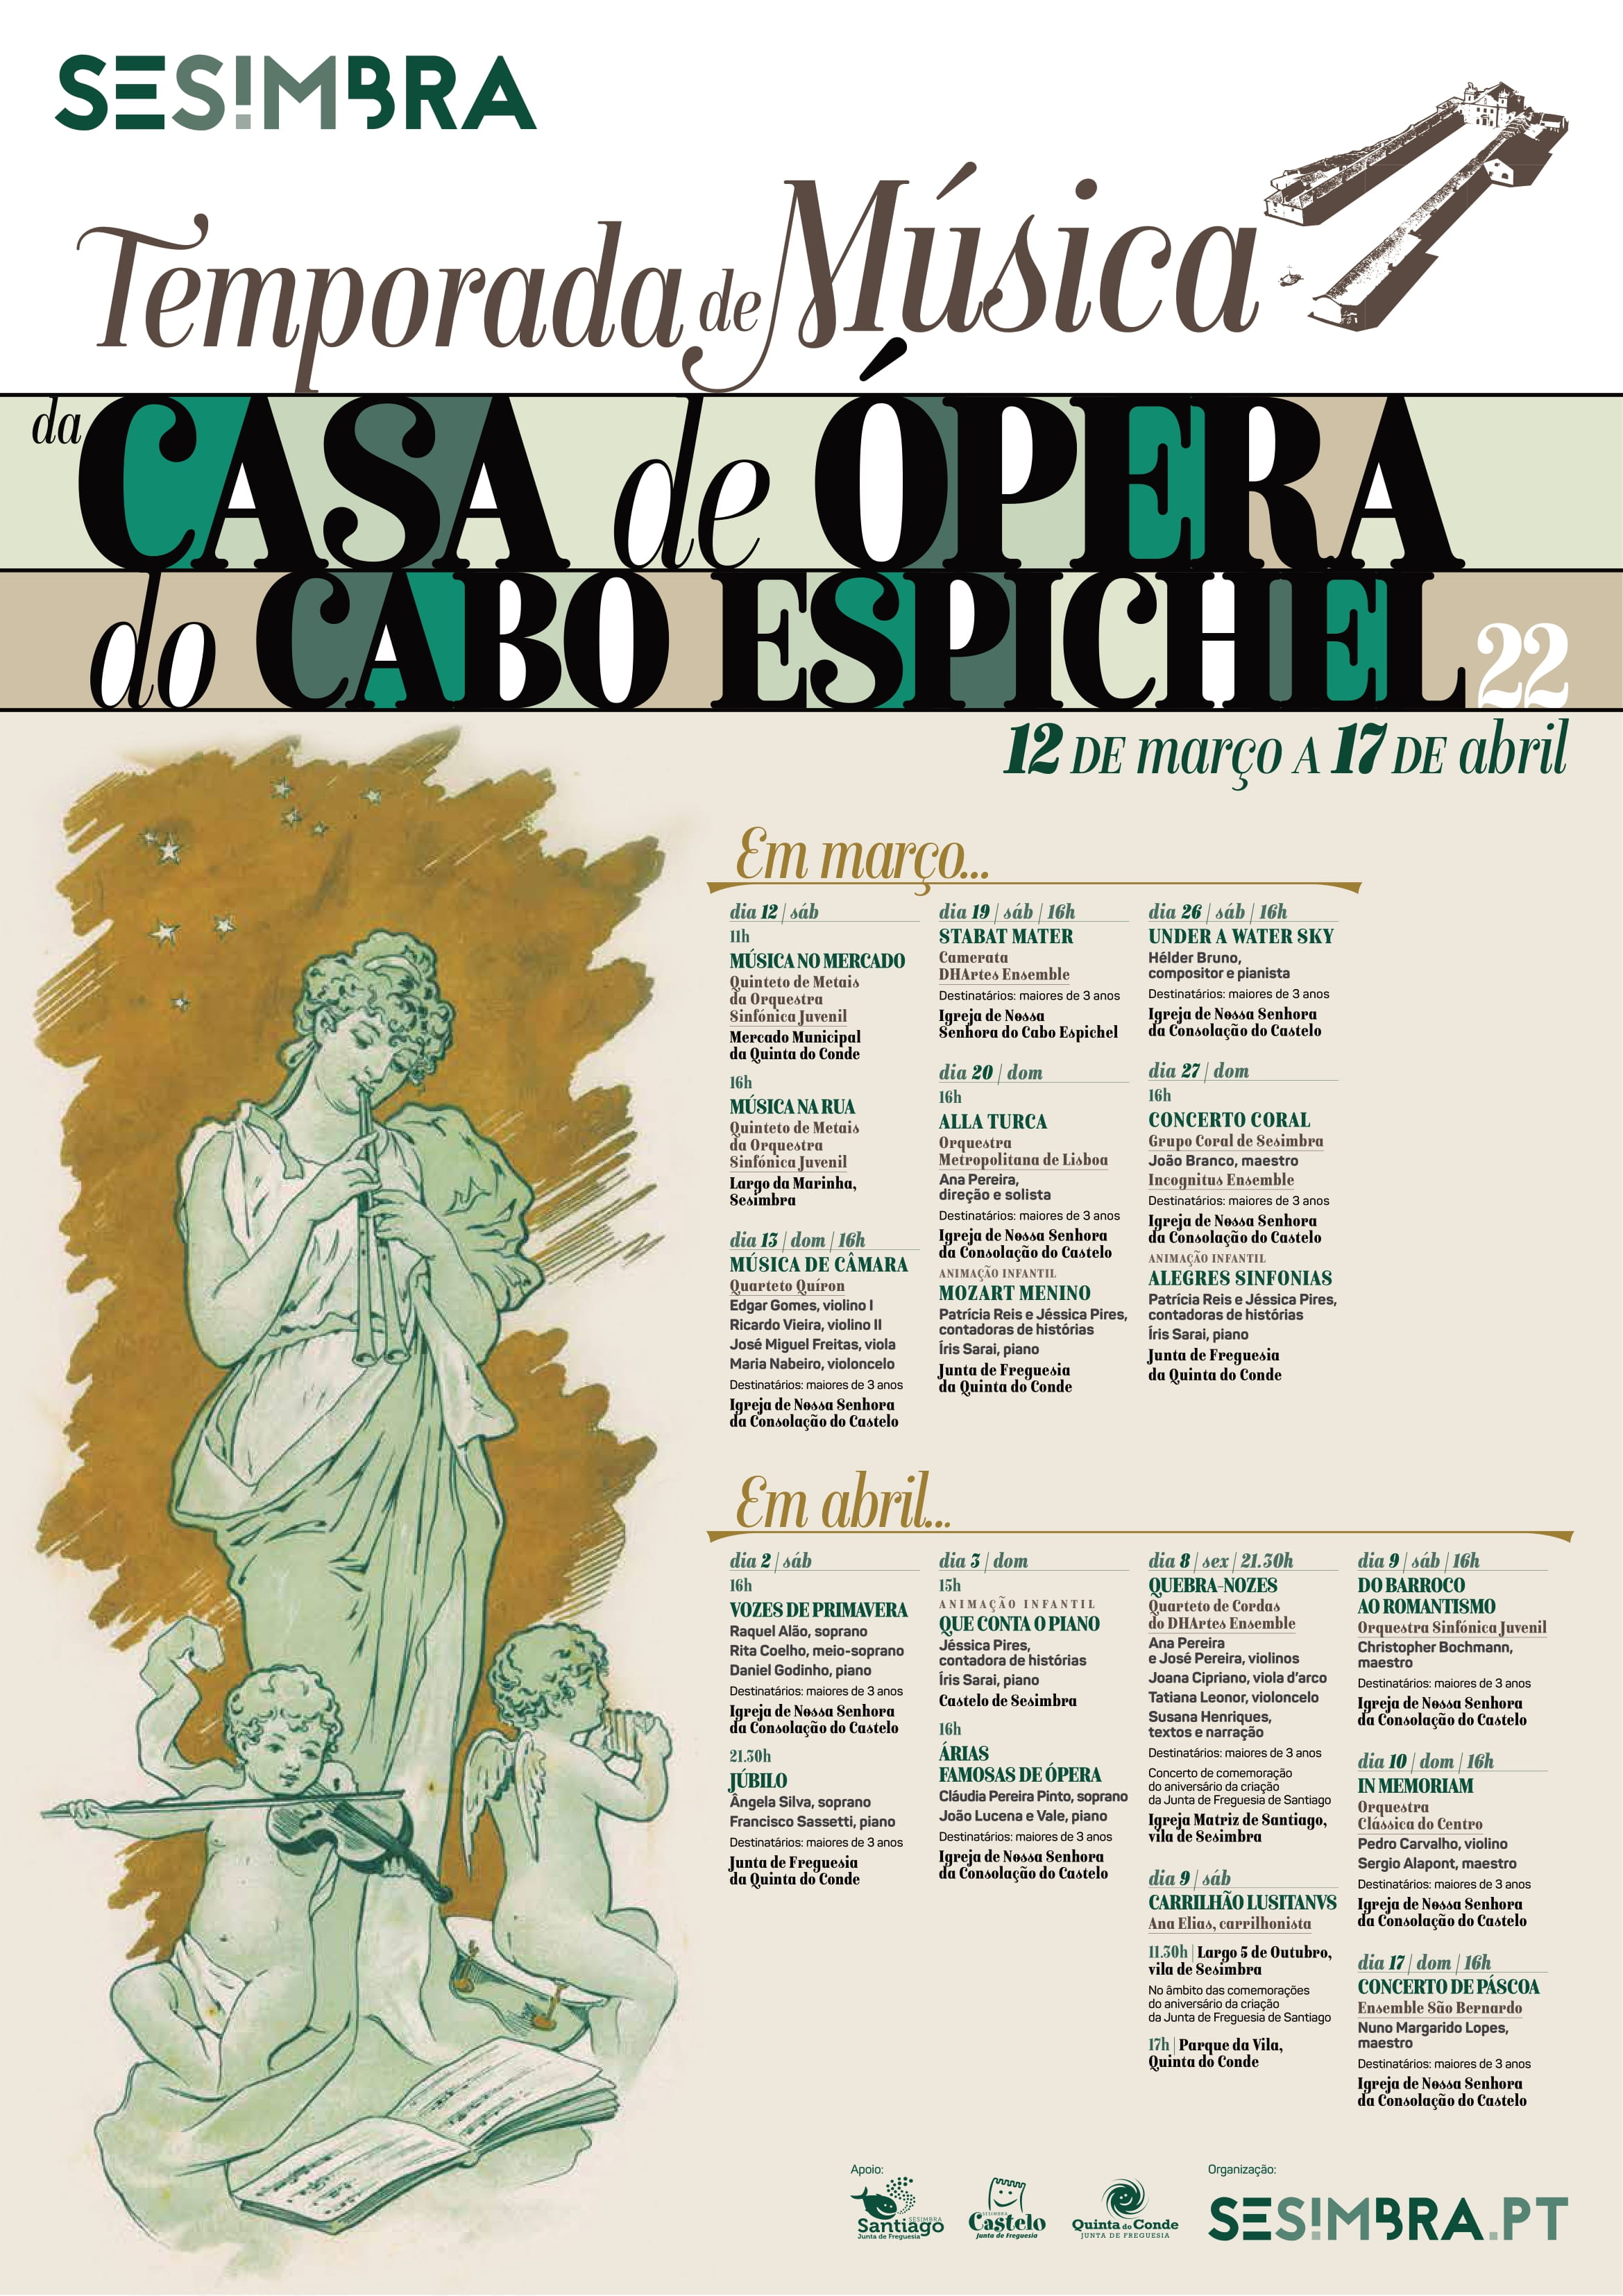 TEMPORADA DE MUSICA DA CASA DE OPERA DO CABO ESPICHEL